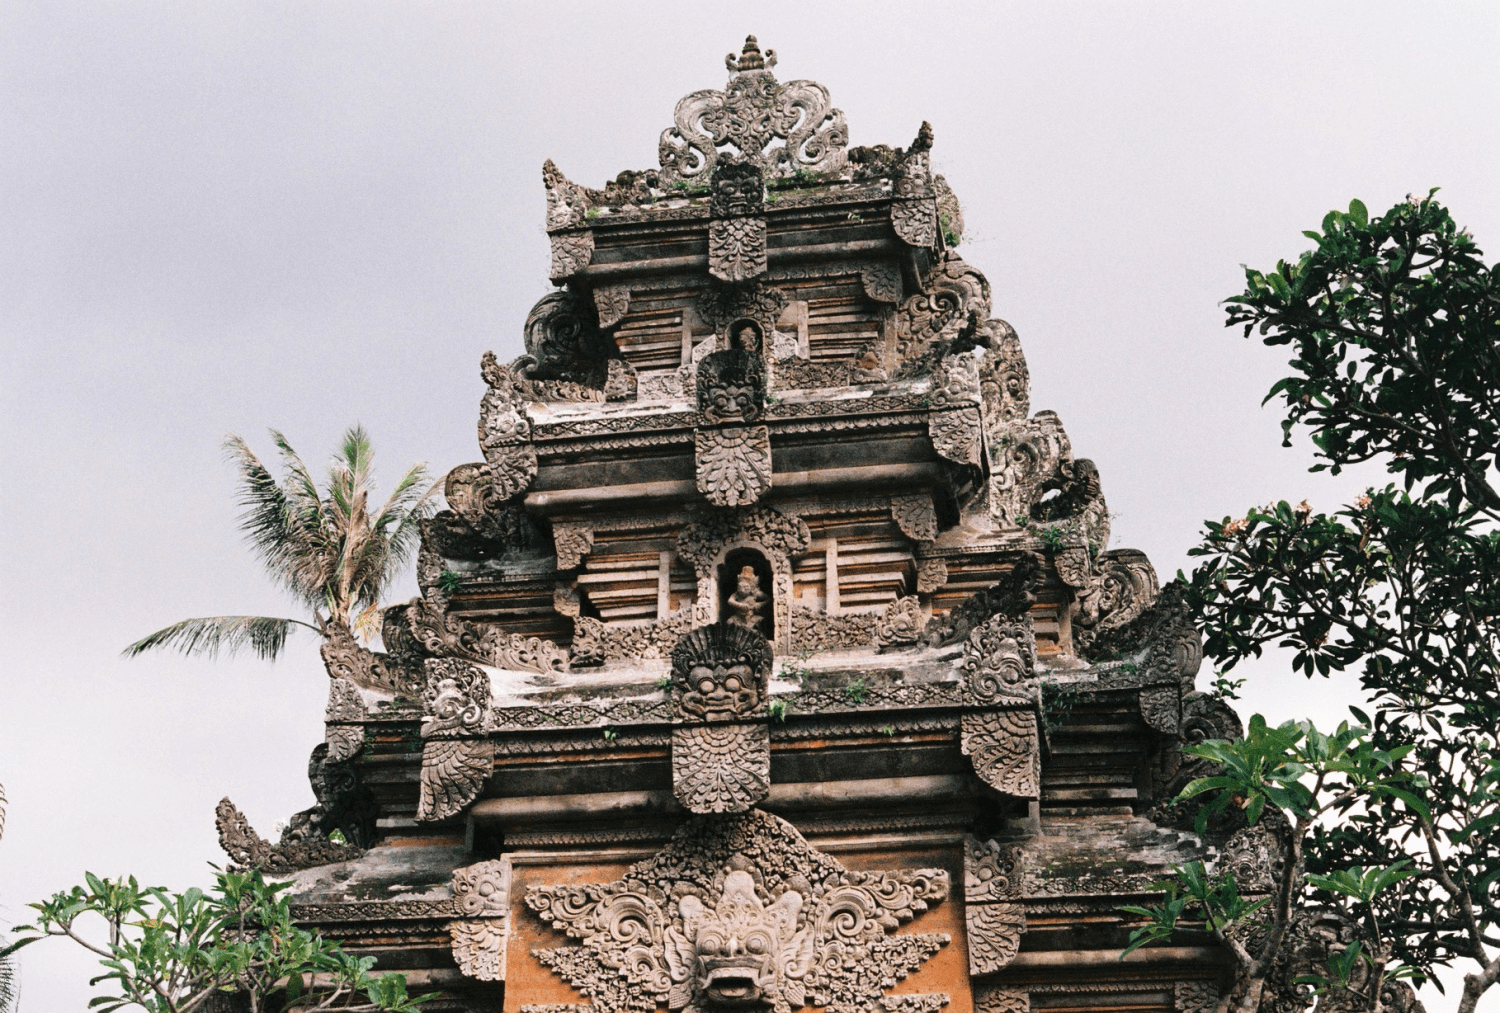 Bali on Film (35mm)